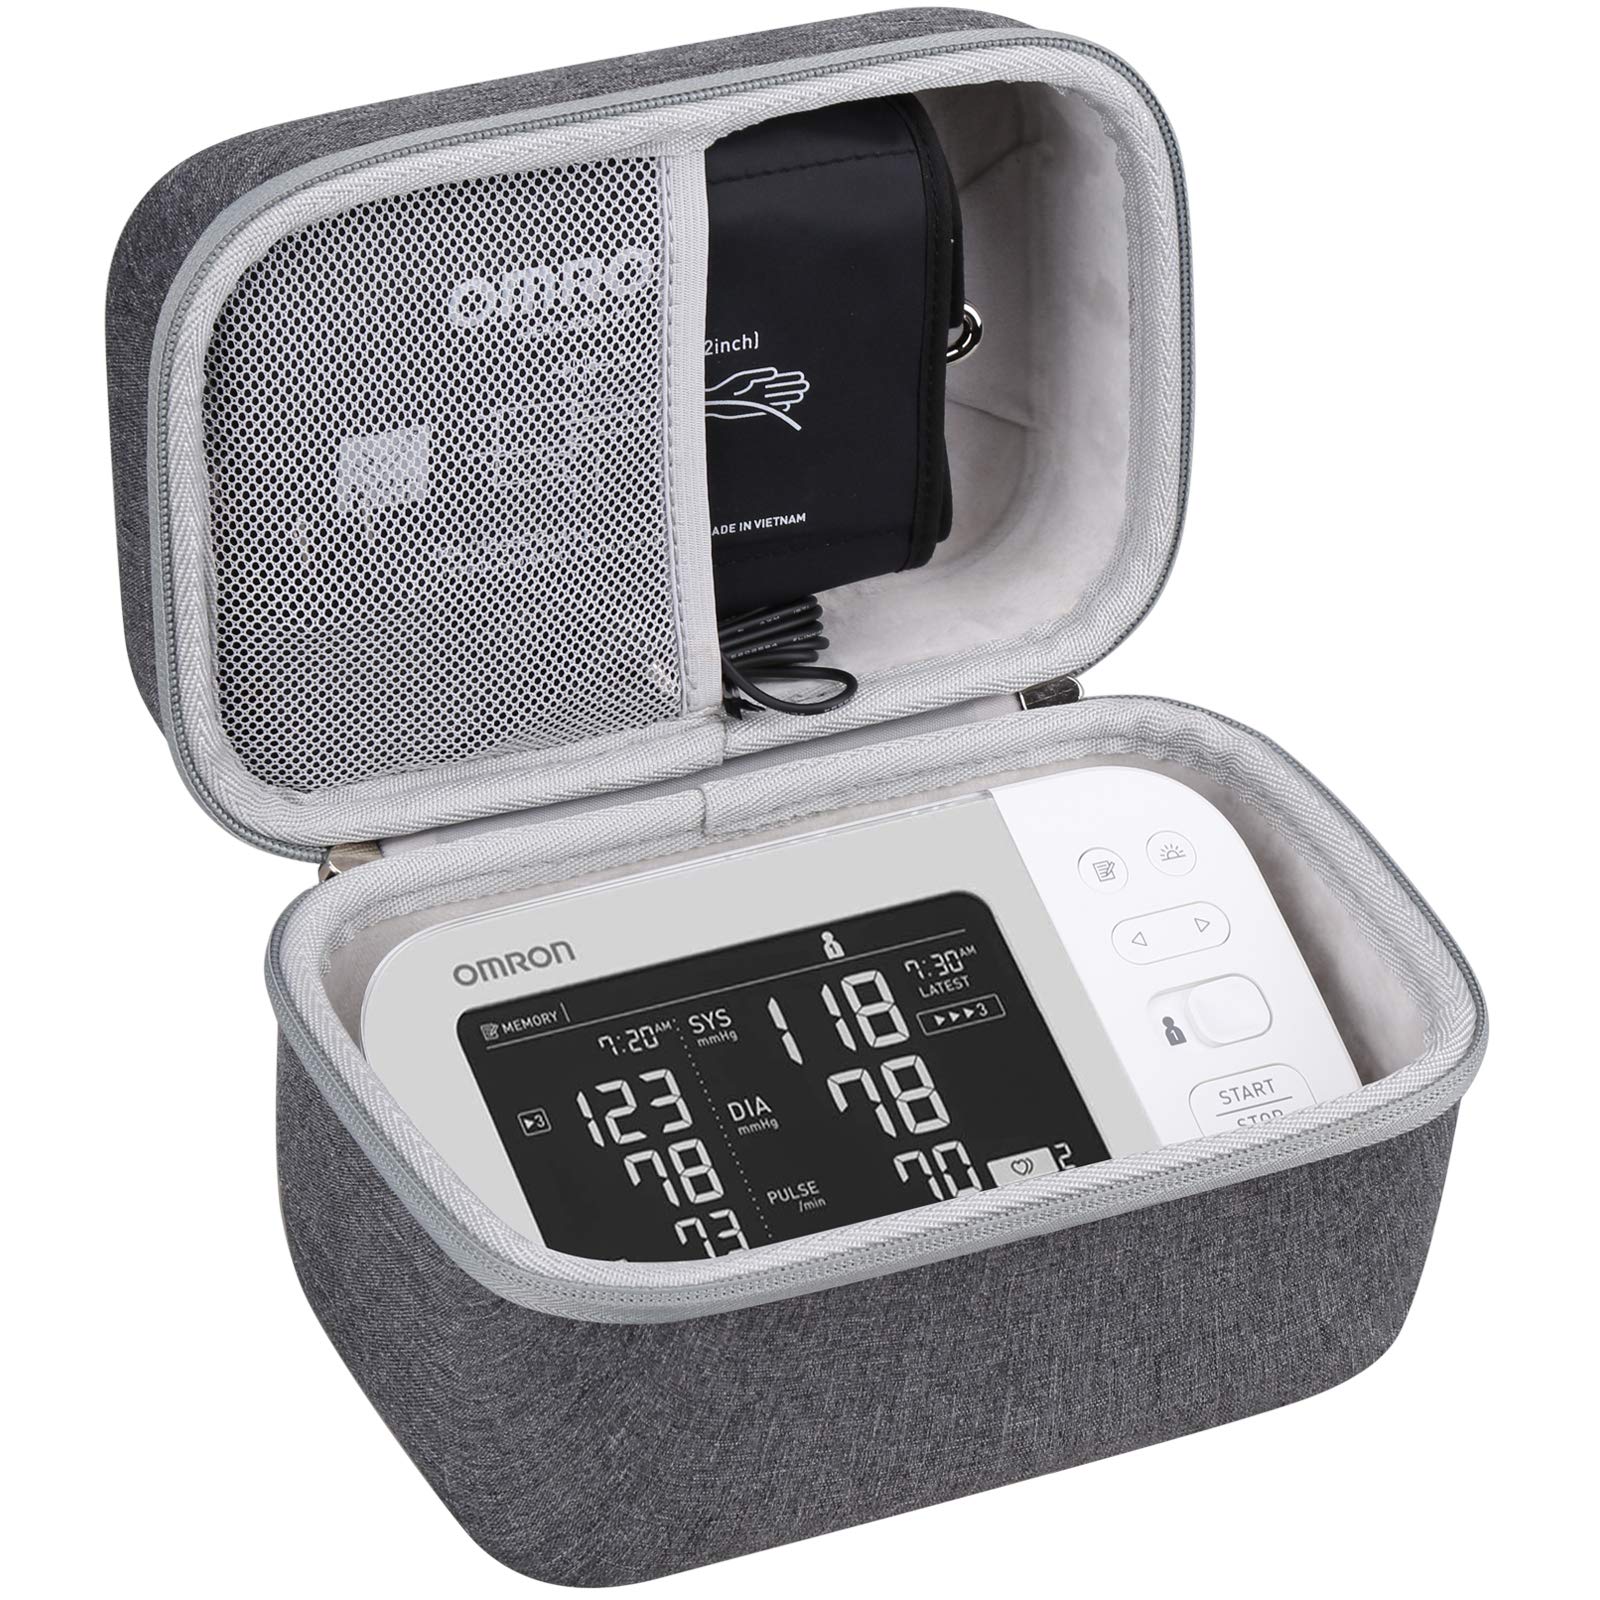  LTGEM Hard Case for OMRON Platinum BP5450 / Gold BP5350 Blood  Pressure Monitor(Inside: 8.5x5.1x4.5), Case Only : Health & Household